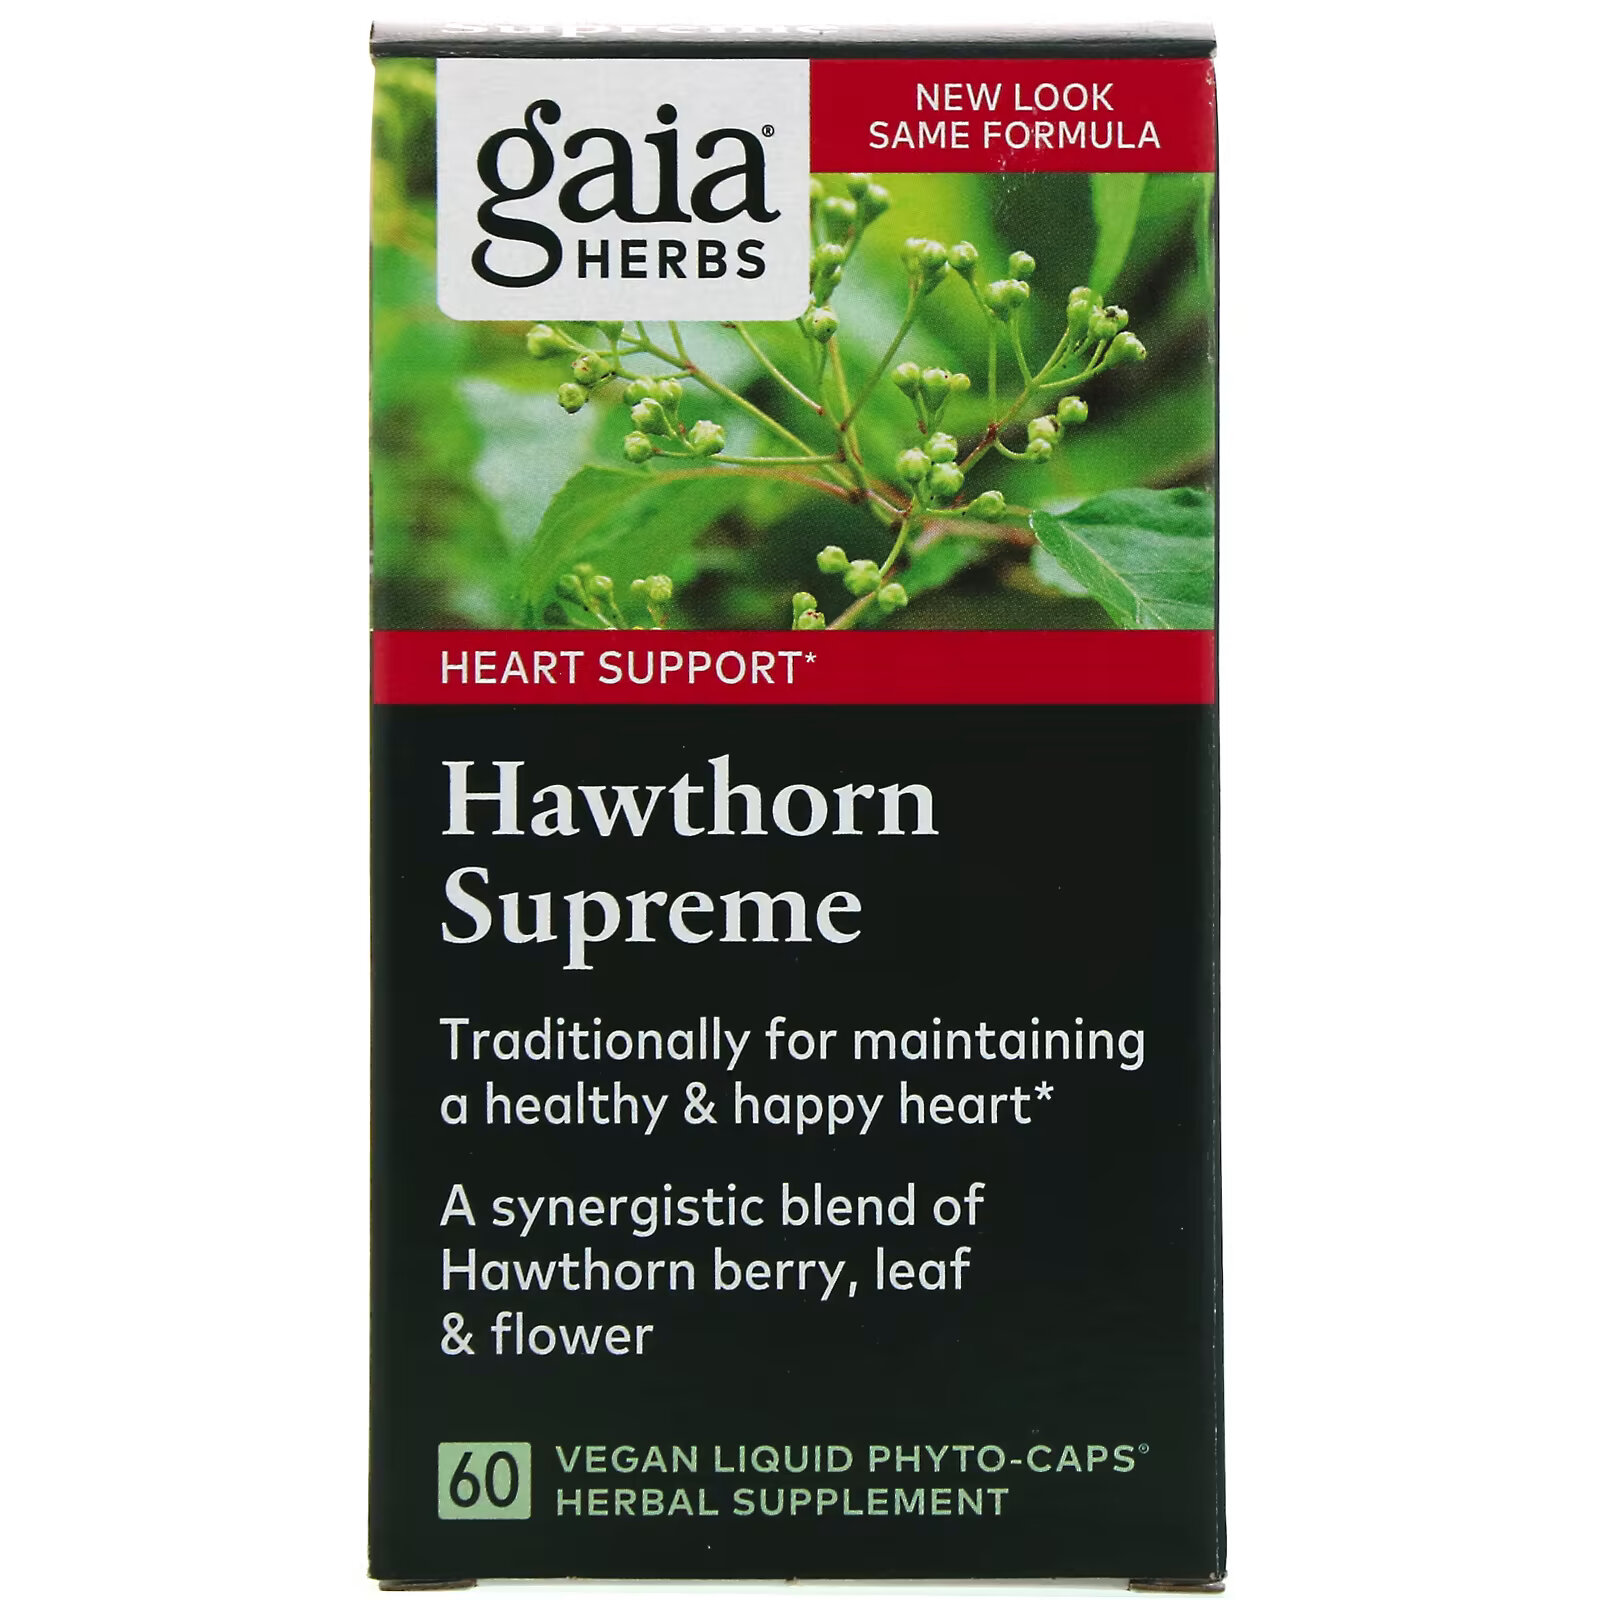 Gaia Herbs, Hawthorn Supreme, 60 растительных капсул с жидкостью gaia herbs professional solutions средство для укрепления иммунитета 60 капсул заполненных жидкостью